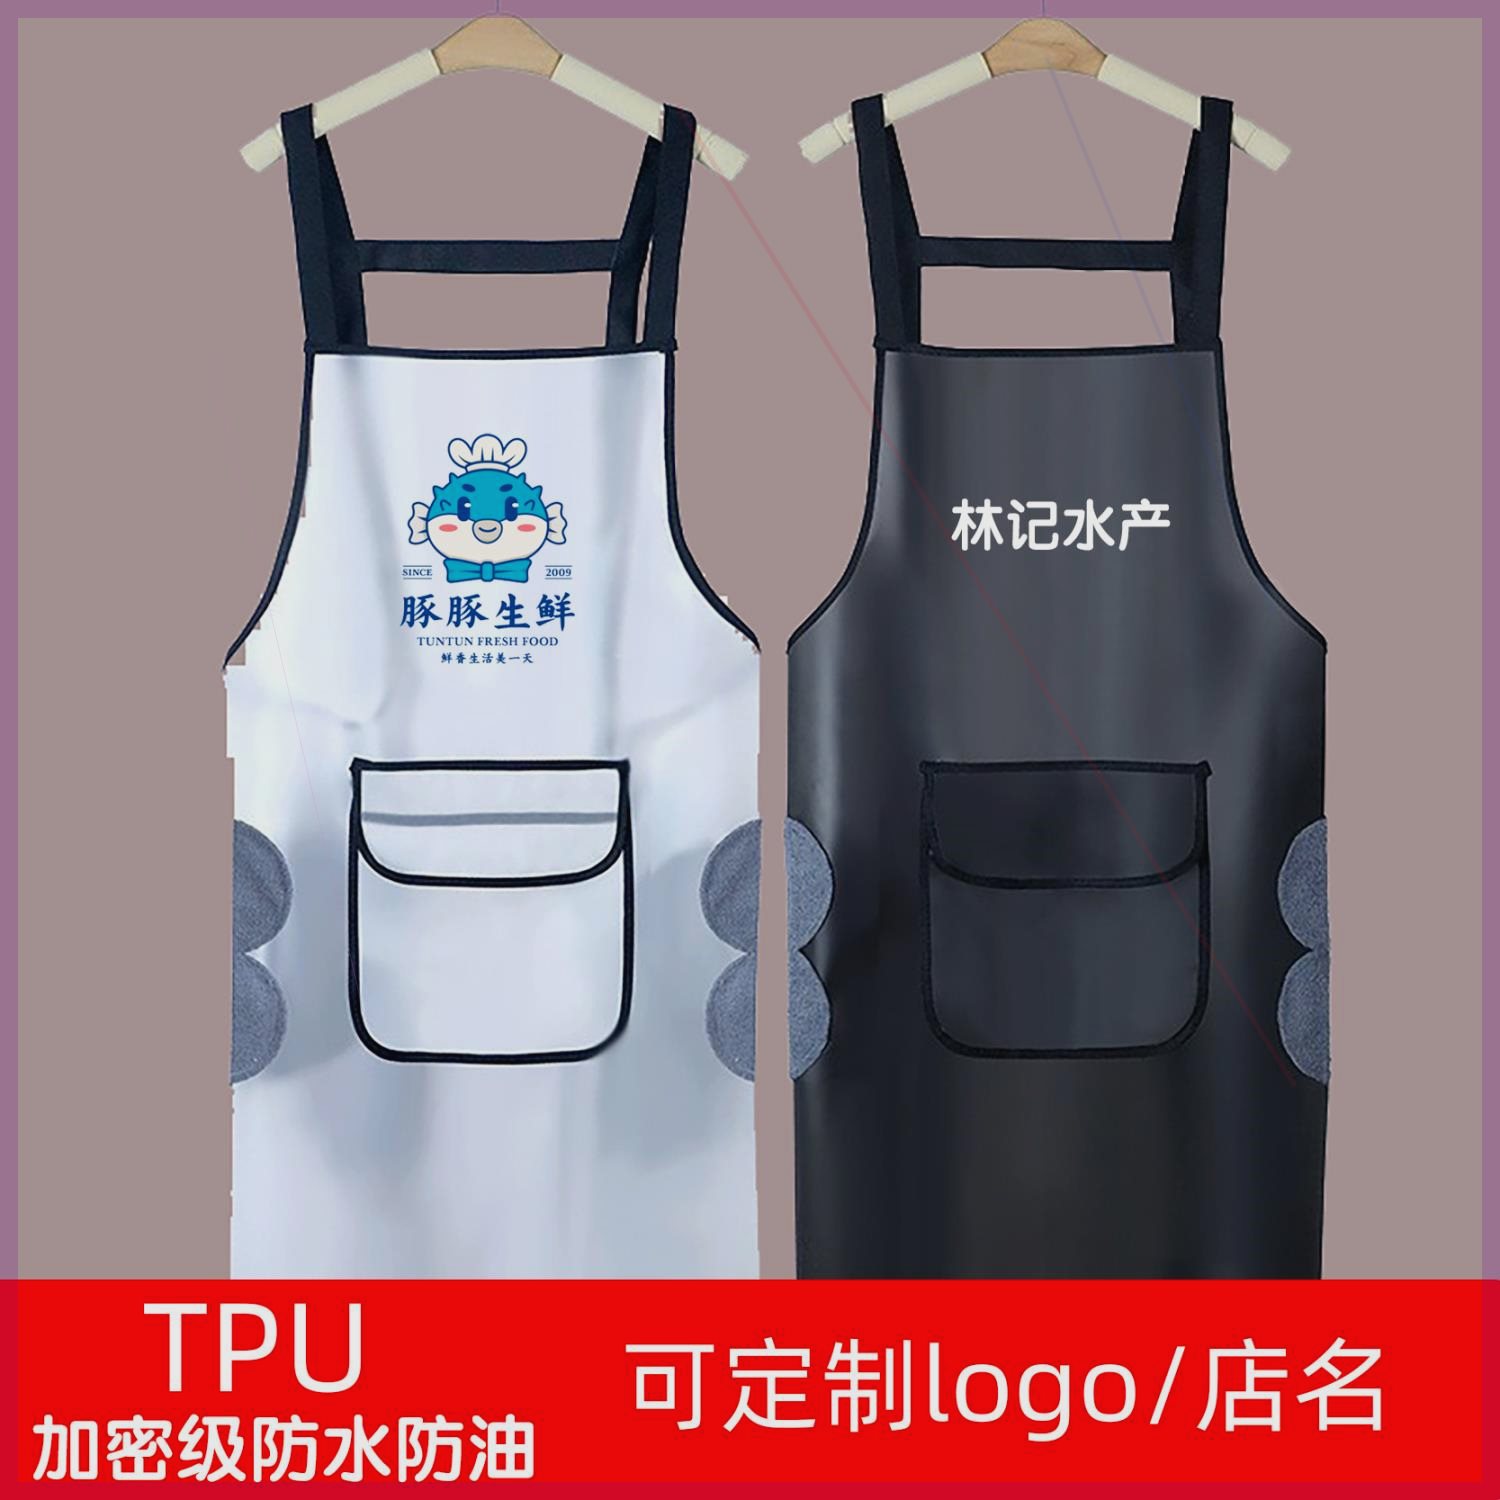 TPU强防水防油透明双肩背带围裙海生鲜水产餐饮围裙定制logo印字